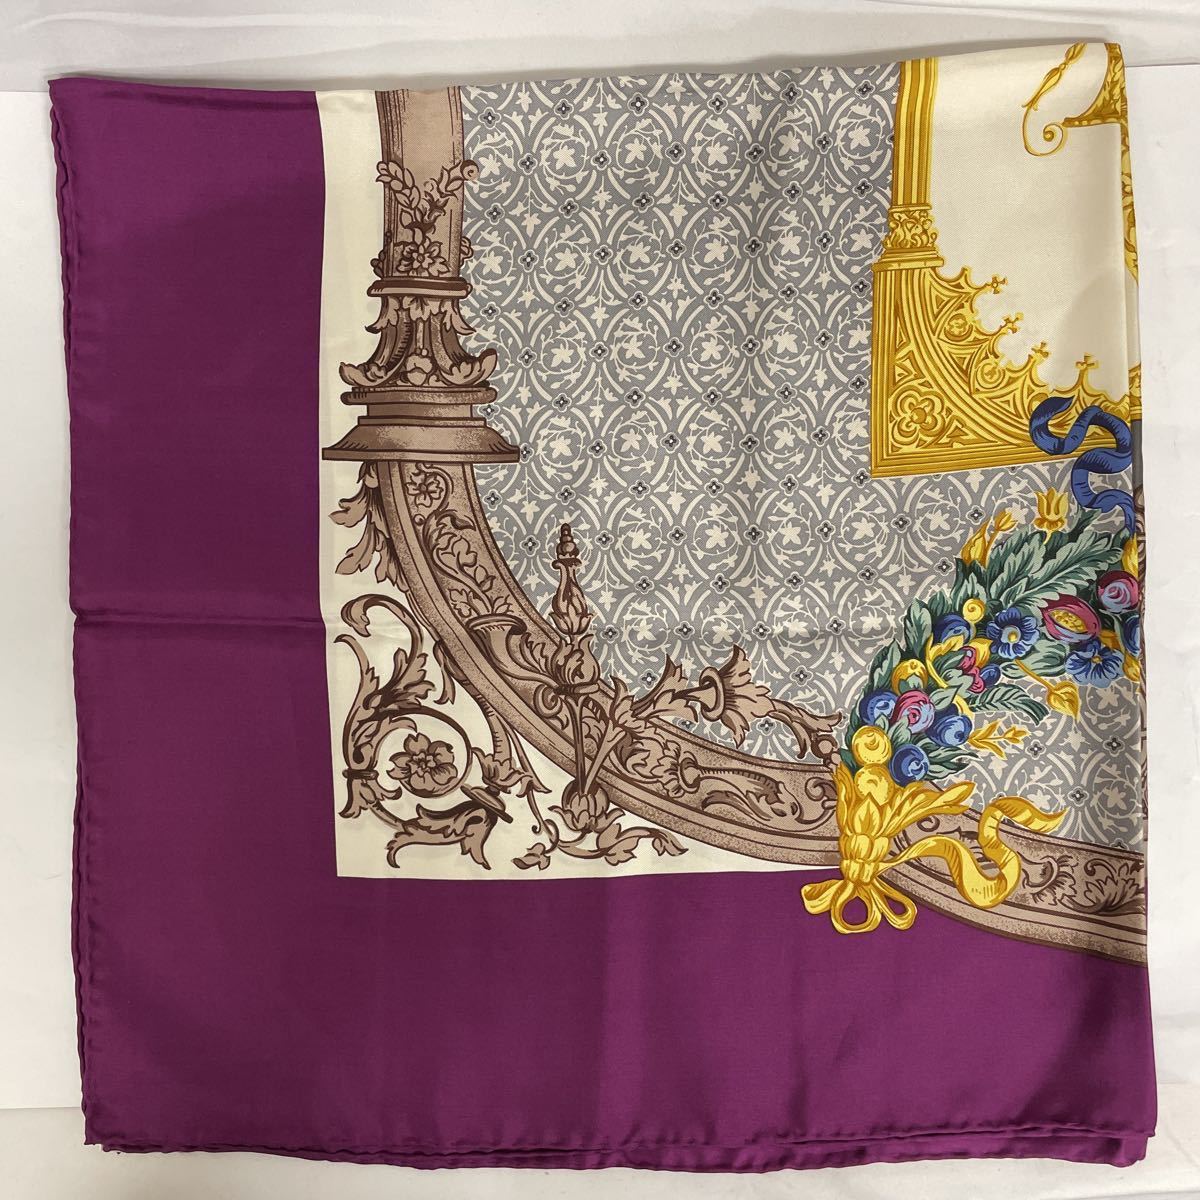 LANCEL Lancel over n scarf scarf purple cotton 100%